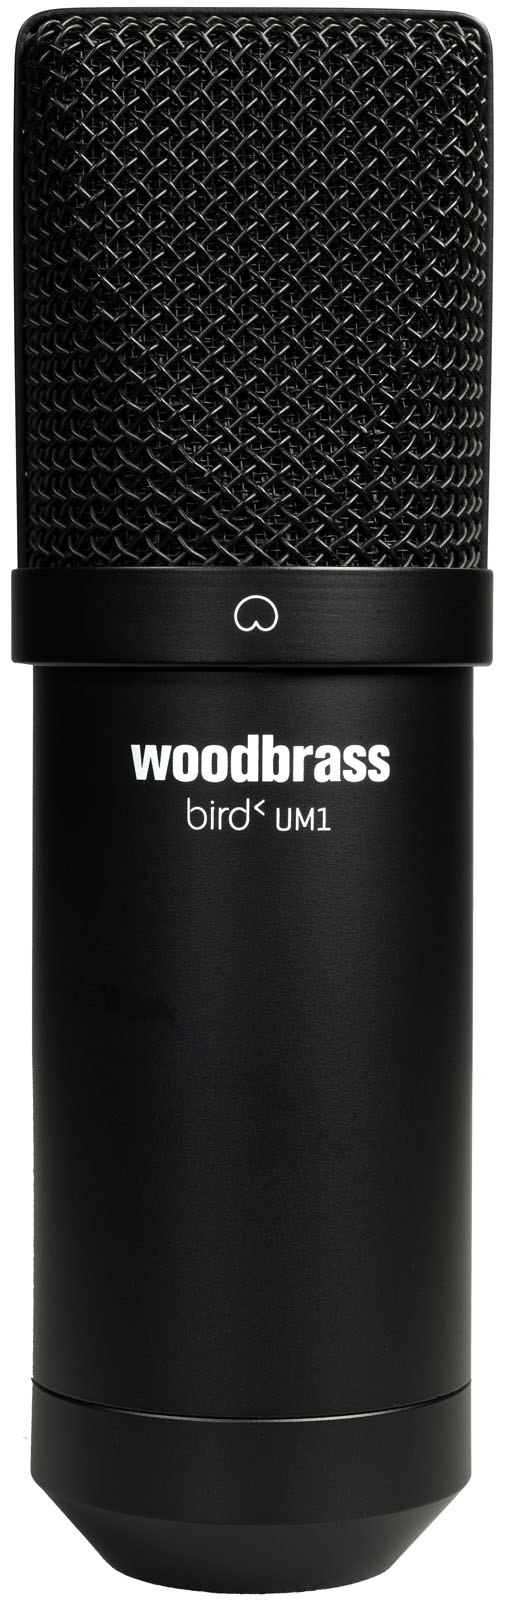 WOODBRASS BIRD UM1 - RECONDITIONNE